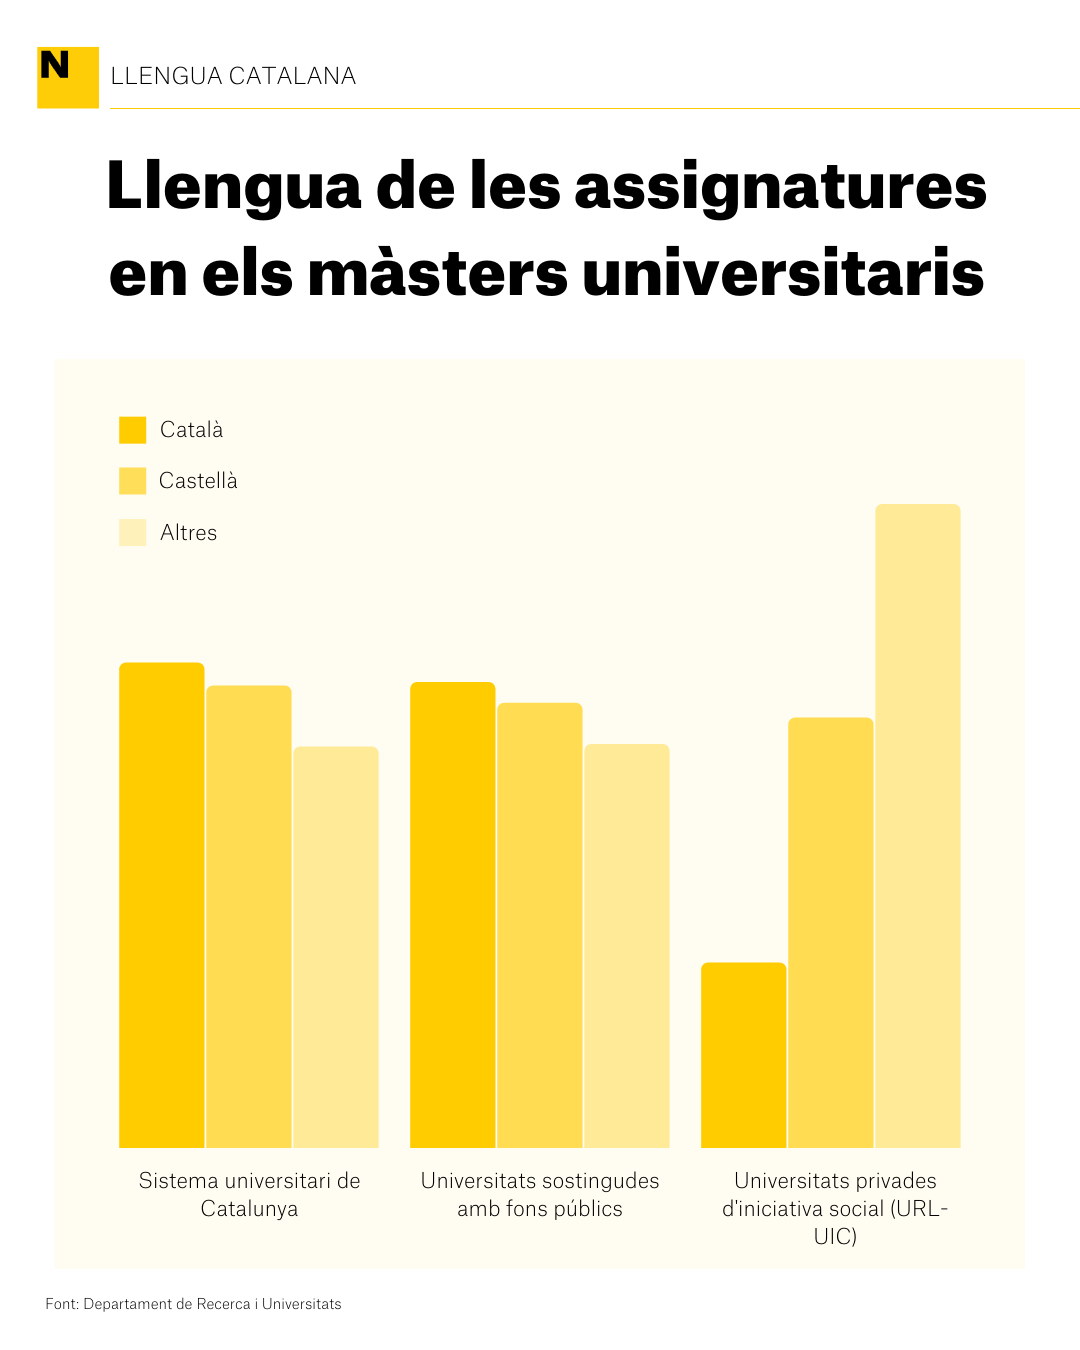 lengua asignaturas masters universitarios grafico Departament de Recerca i Universitats